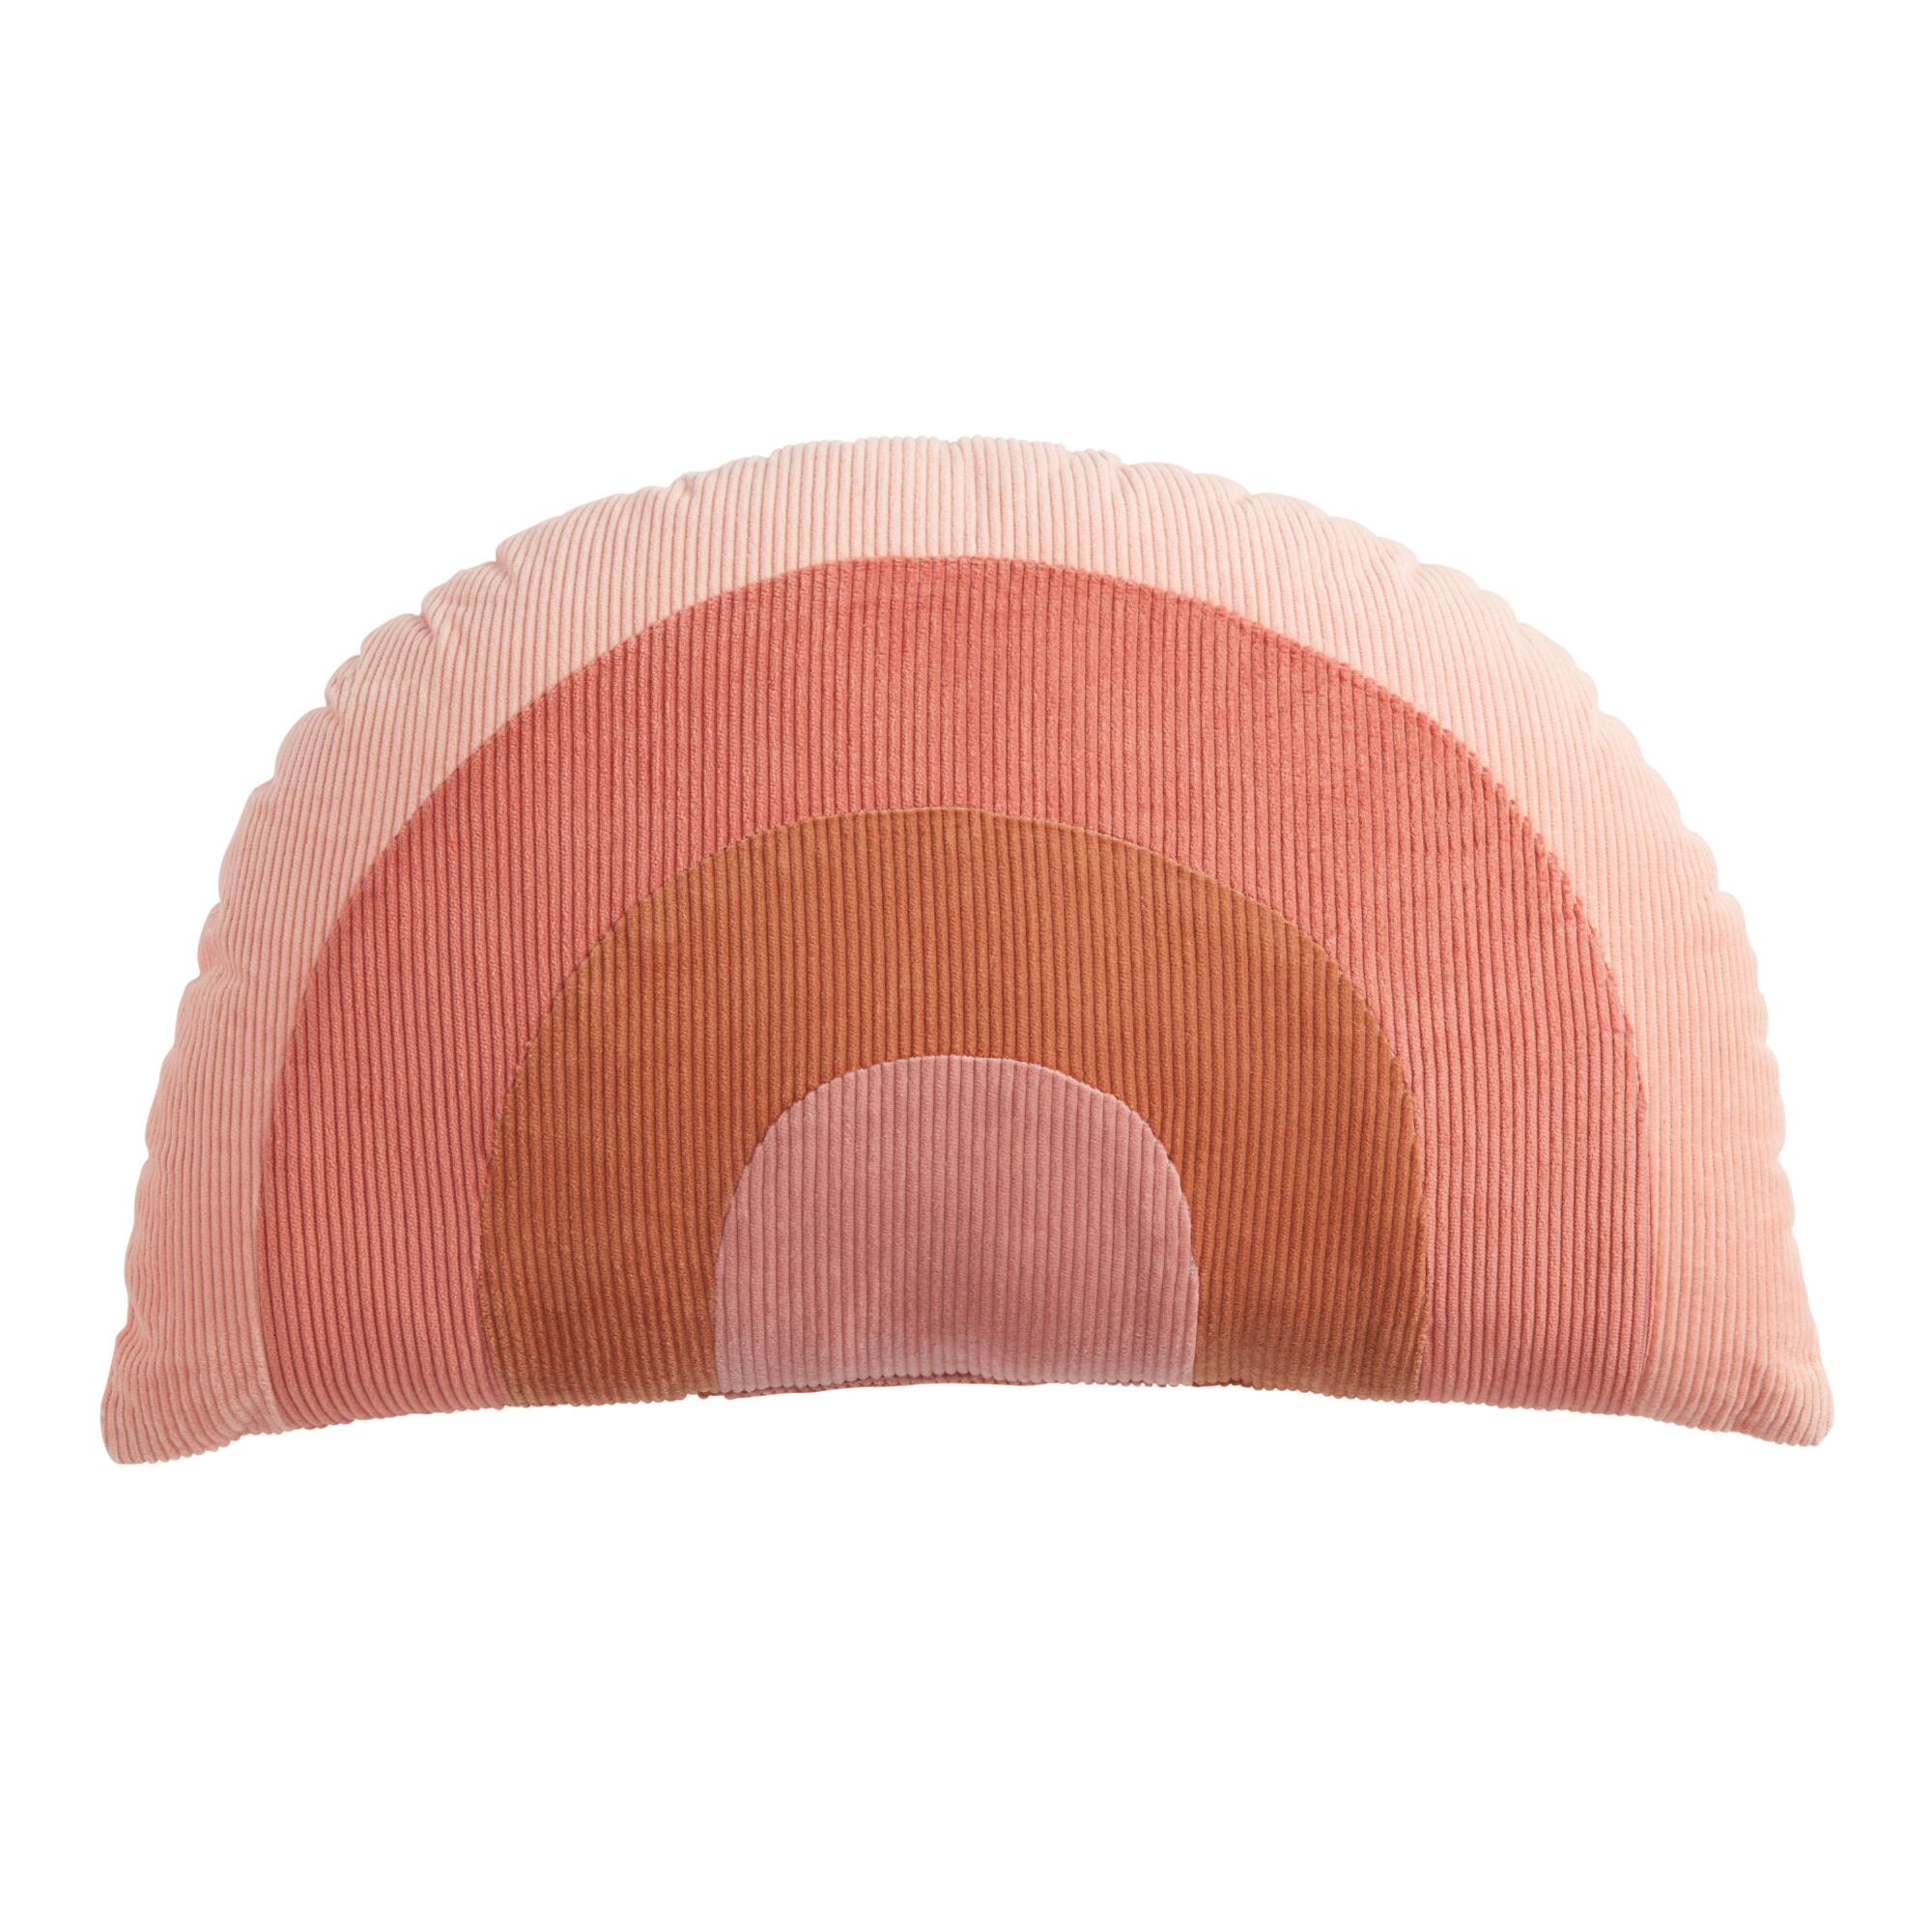 Warm Rainbow Velvet Corduroy Throw Pillow: Pink - Cotton - Lumbar by World Market